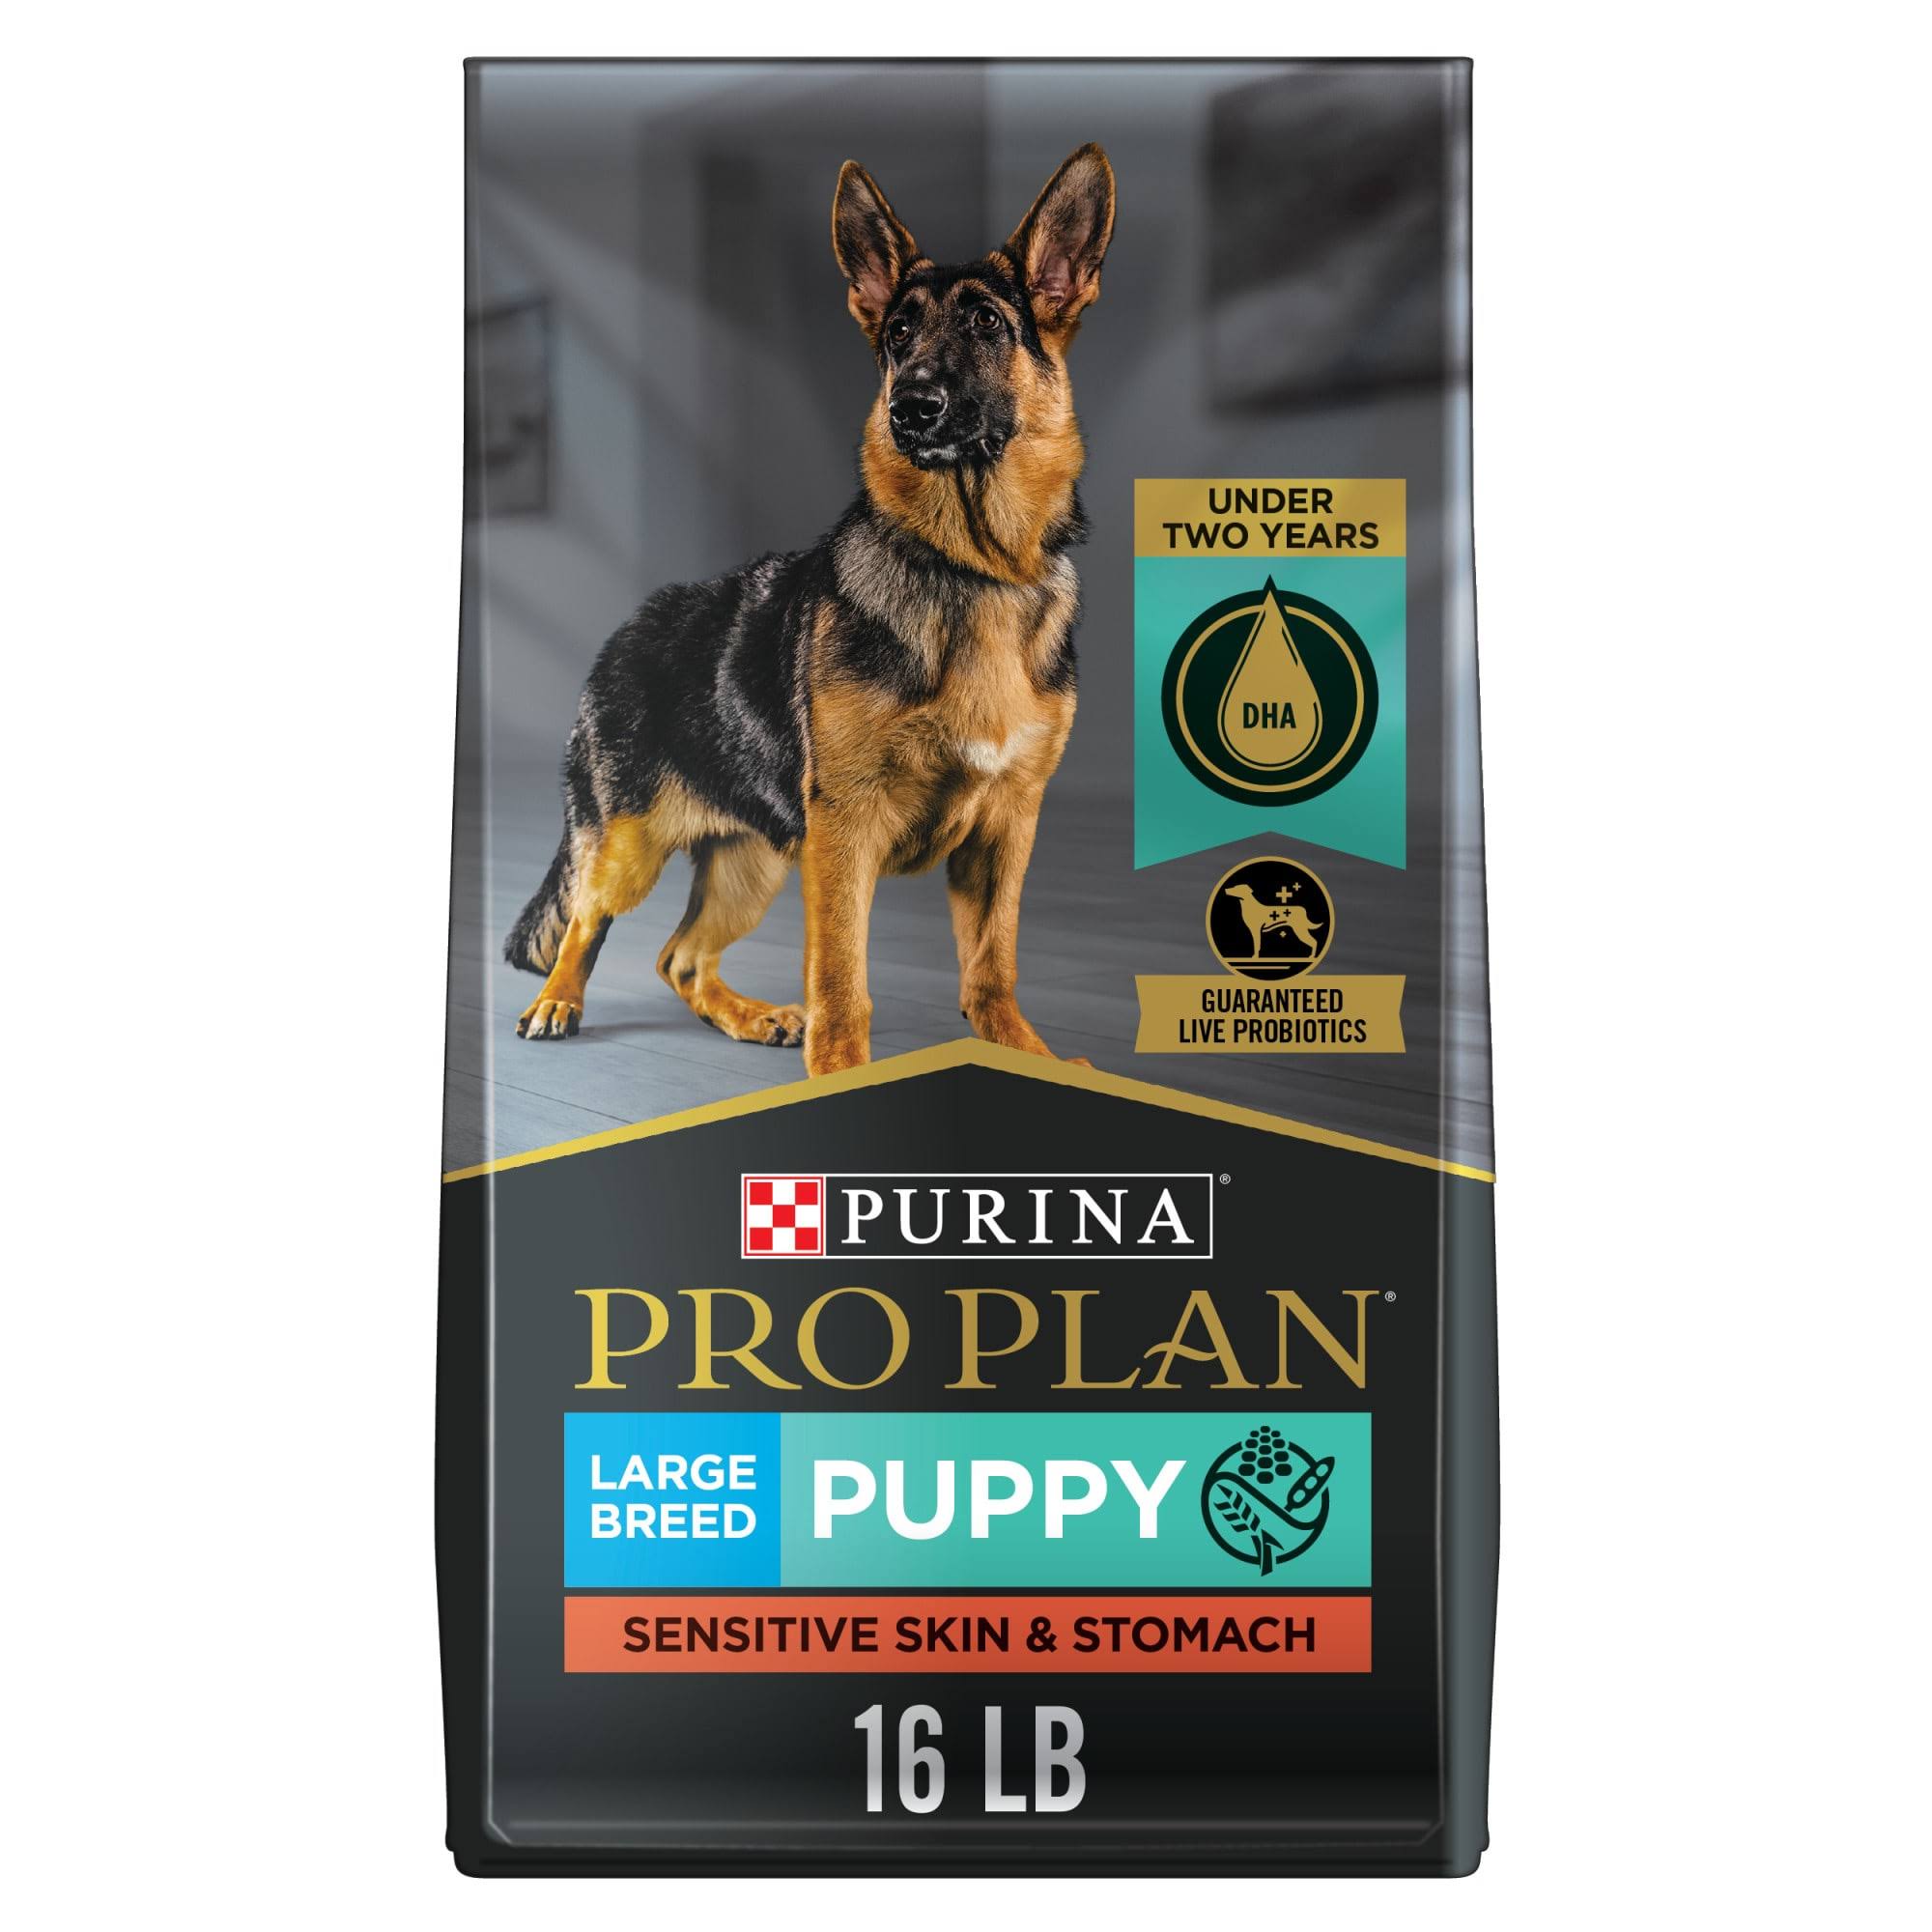 Purina Pro Plan Development Sensitive Skin Stomach Salmon Rice With Probiotics Large Breed Dry Puppy Food - 16 lb Bag